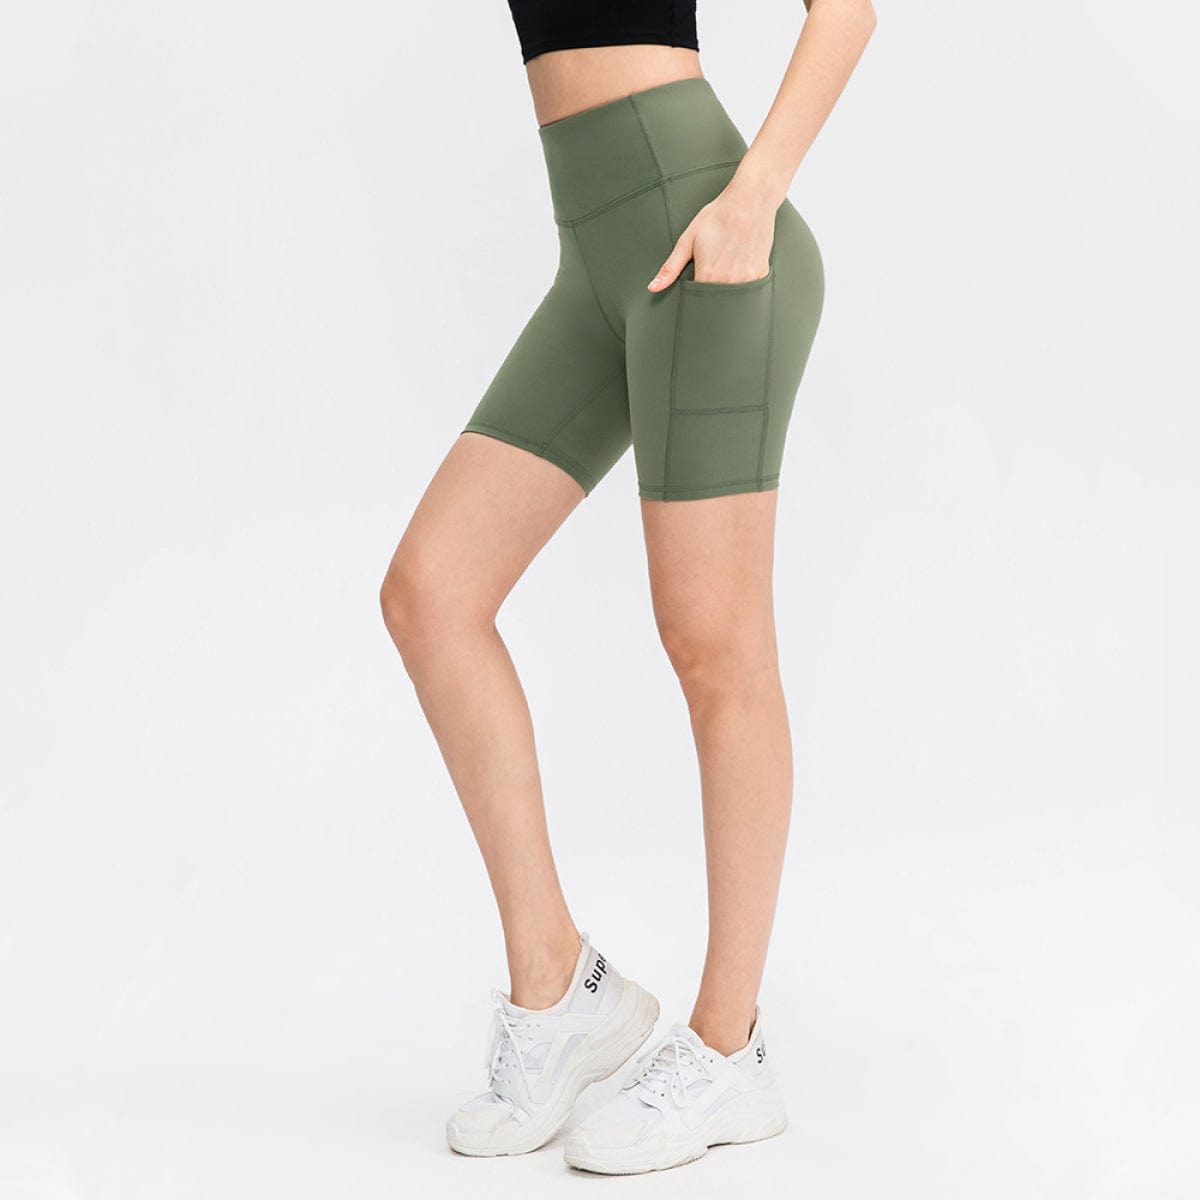 Allrj High Waist Active Shorts With Pockets Green